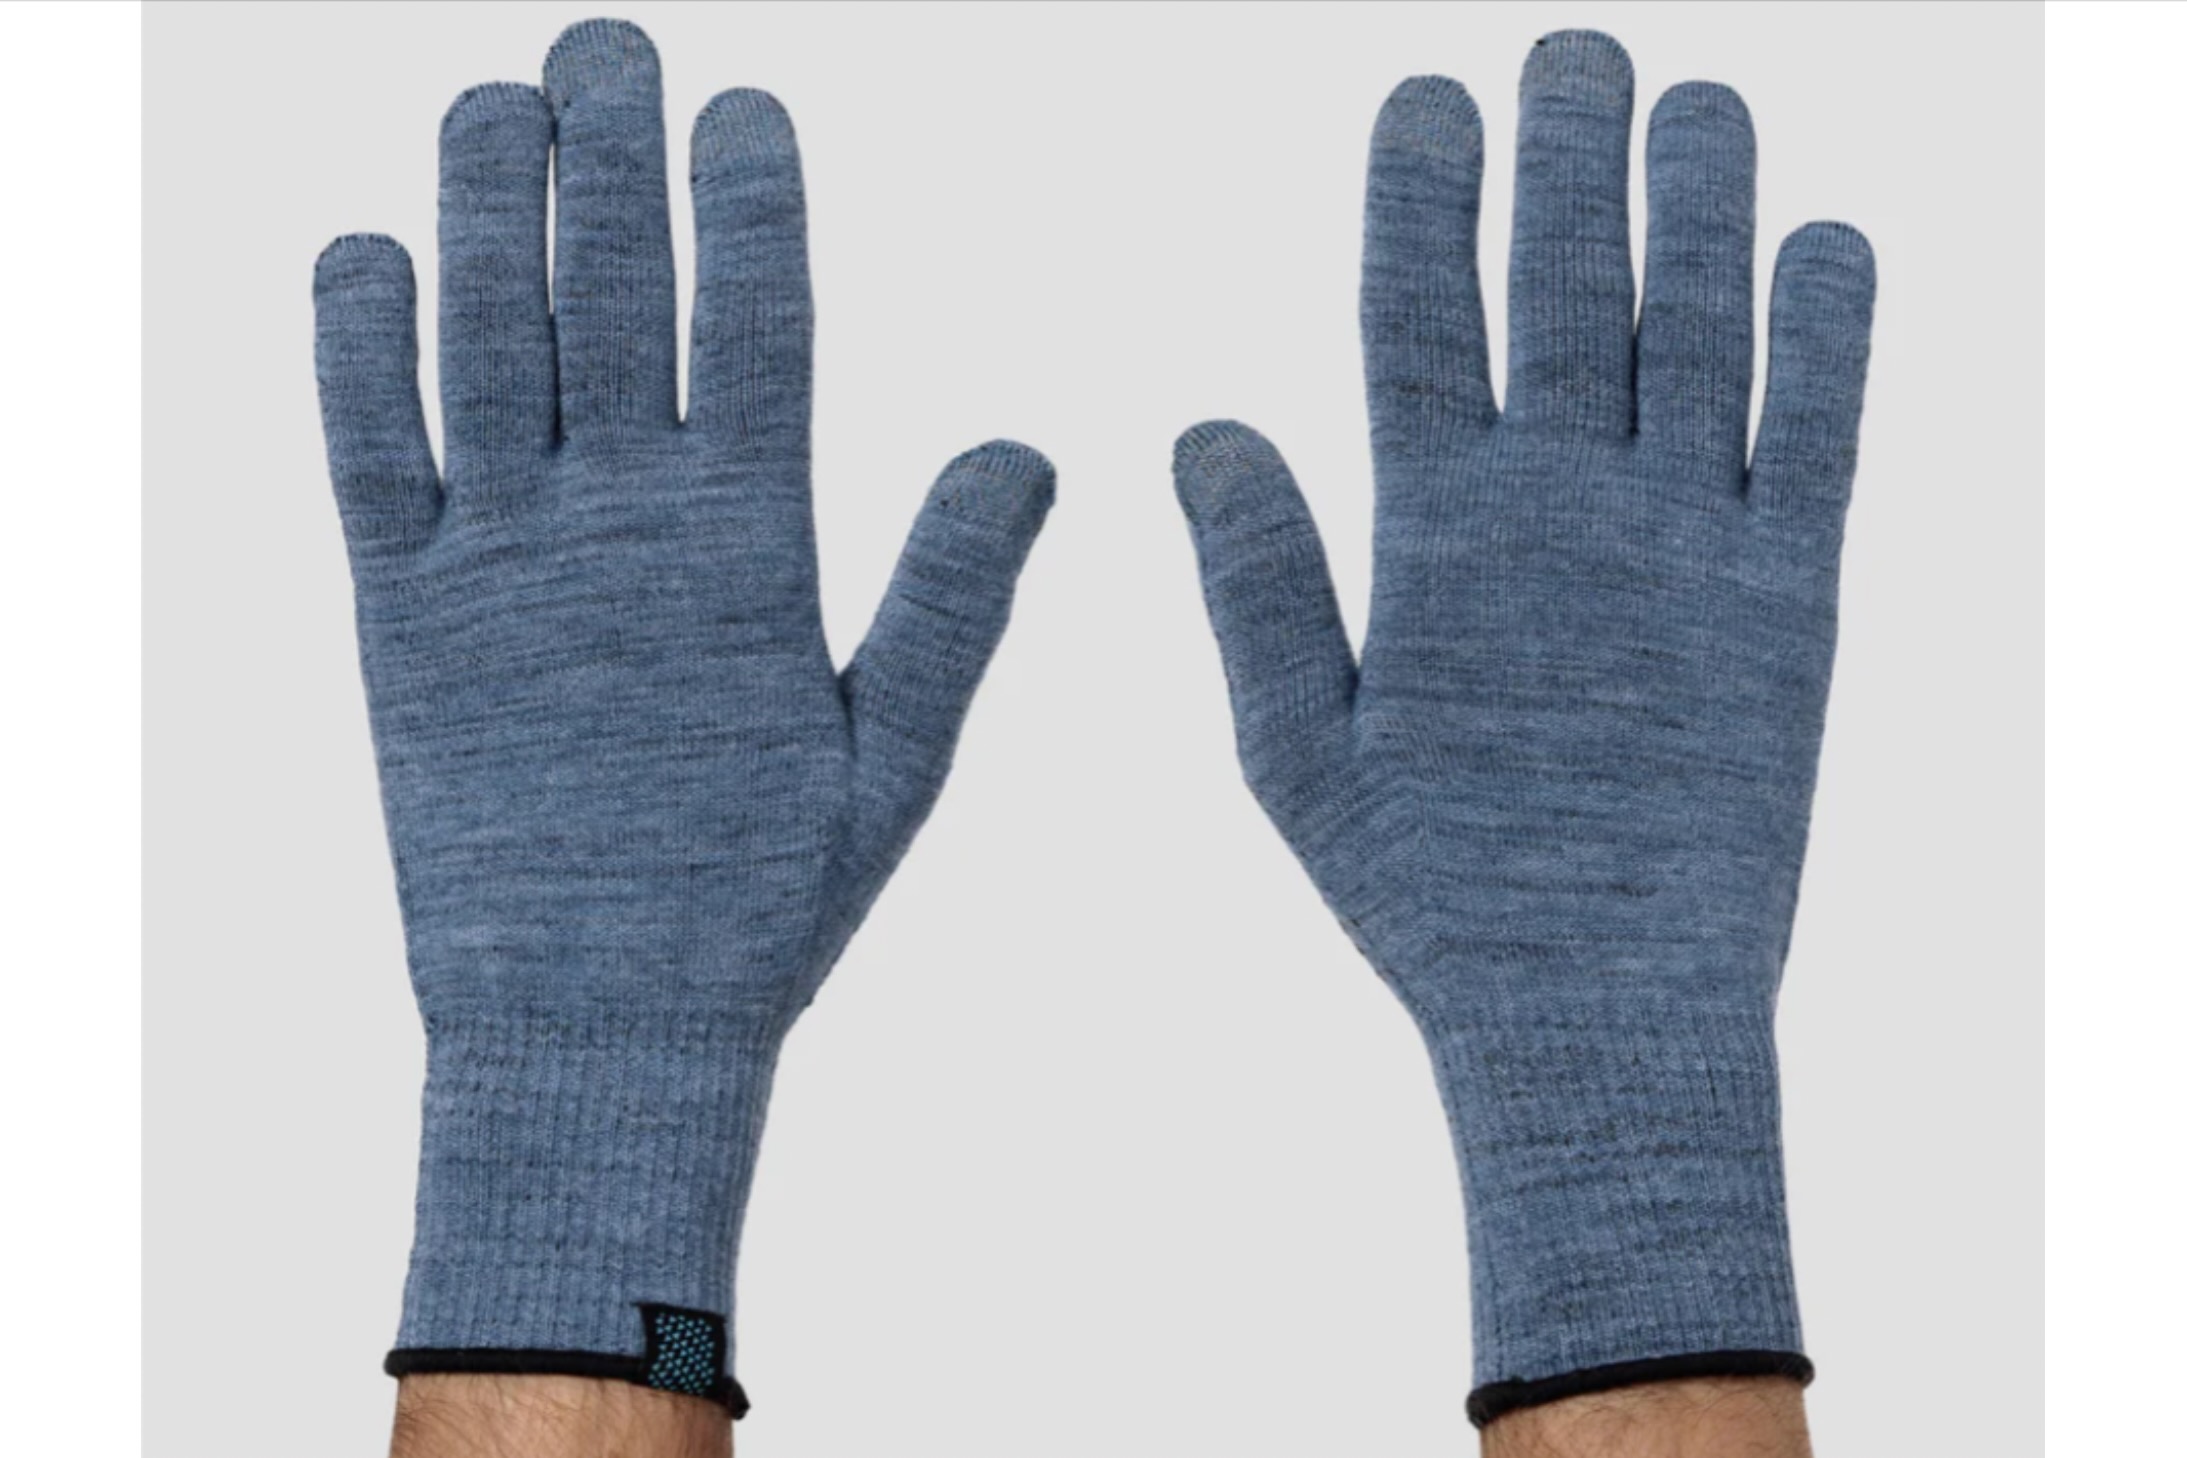 Ornot Merino Gloves